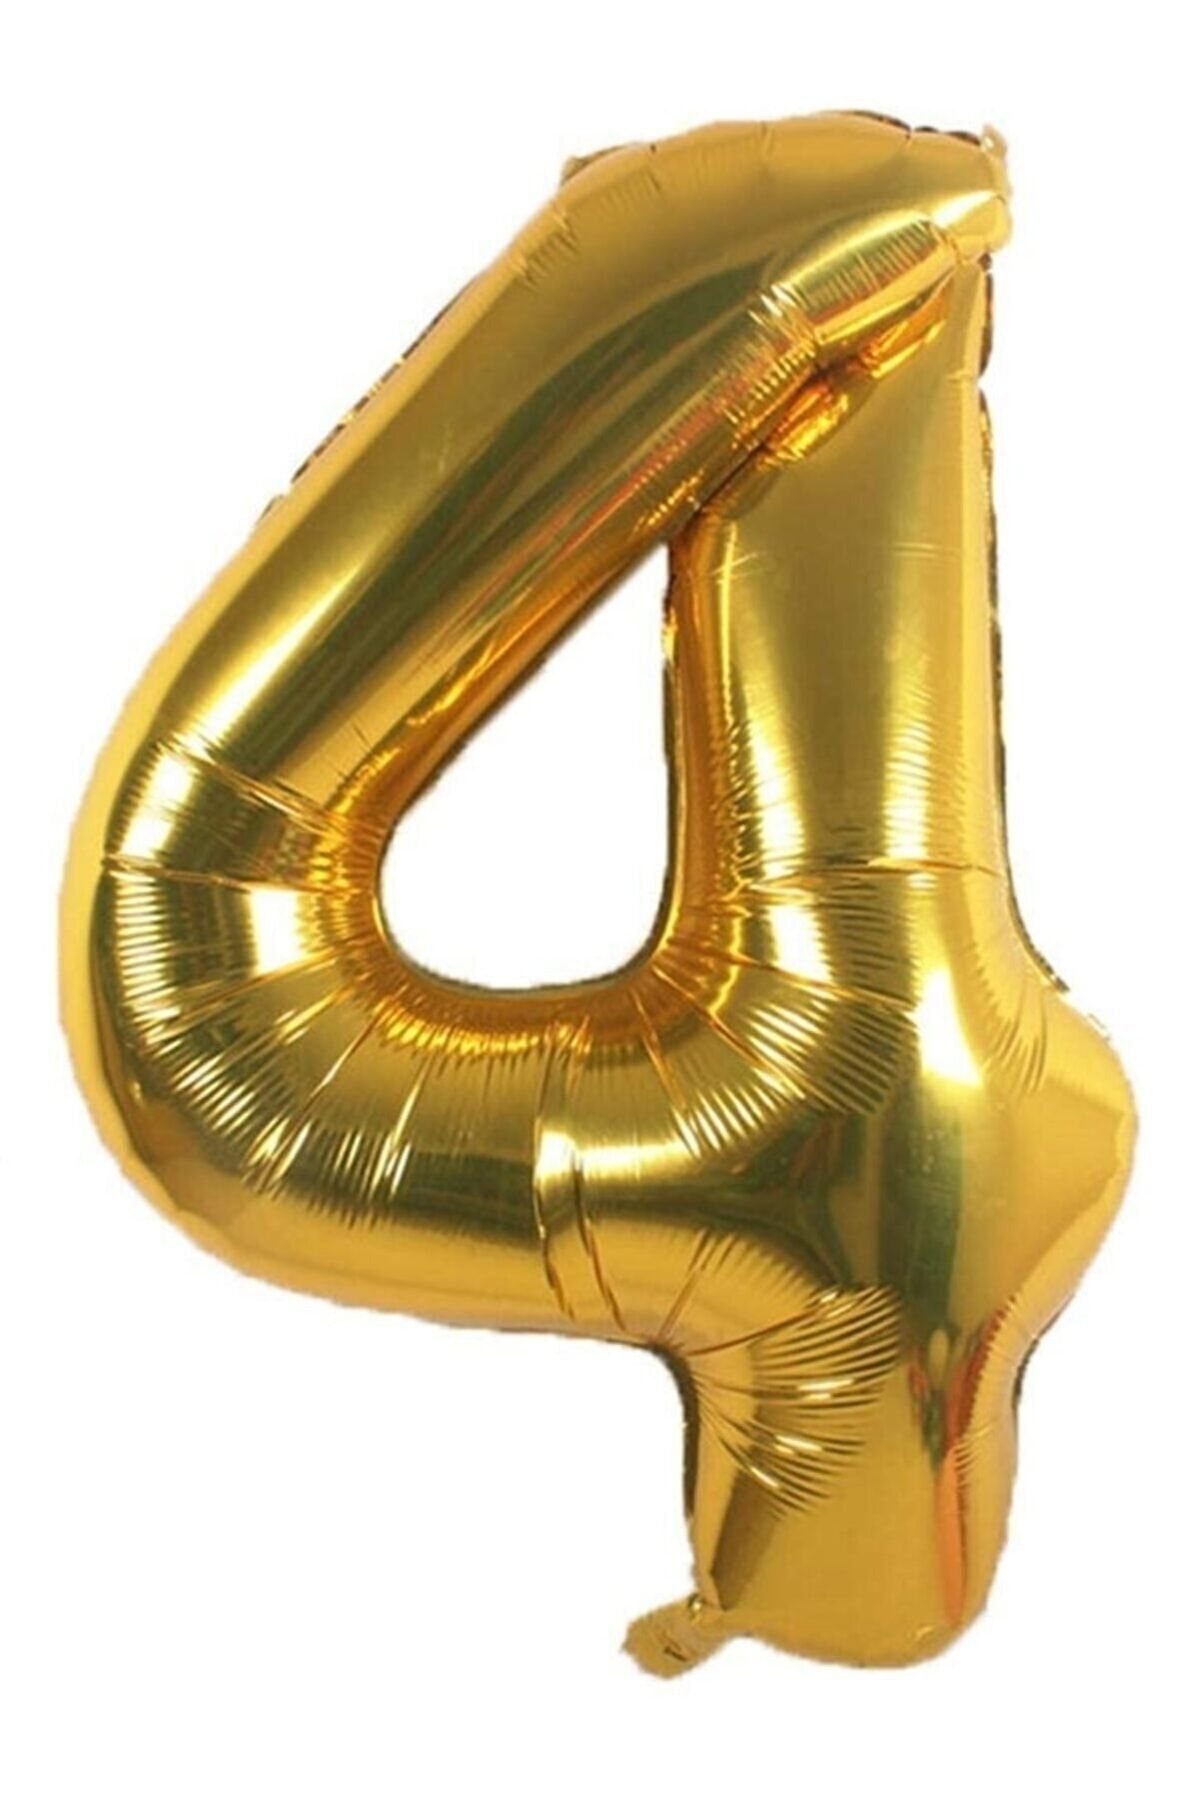 Onay Store Folyo Balon 4 Rakamı Helyum Balon 36 Cm Gold Renk - 4 Yaş Balonu - 4 Yaş Balon -4 Rakam Balon